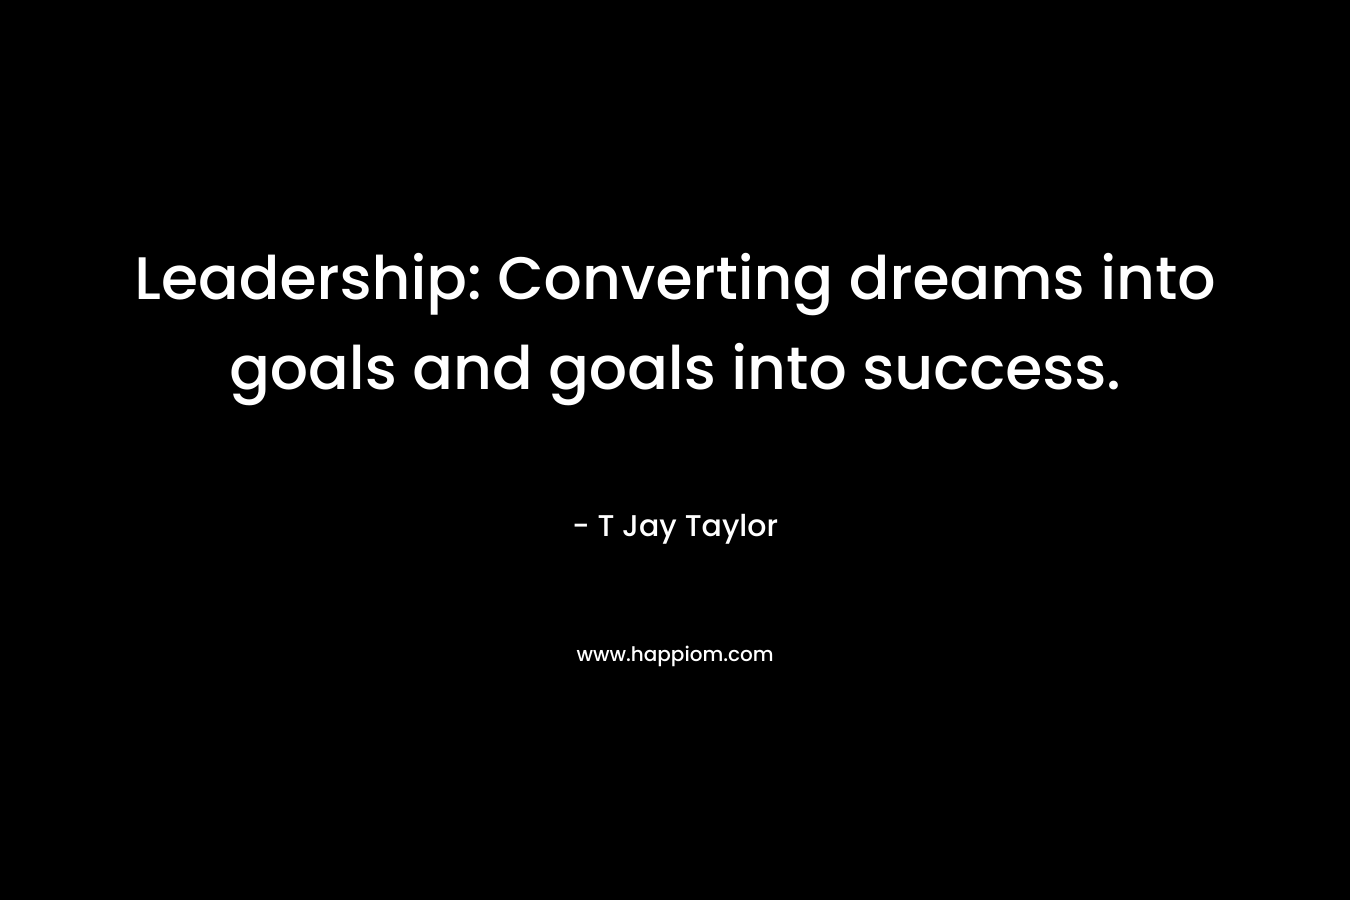 Leadership: Converting dreams into goals and goals into success.